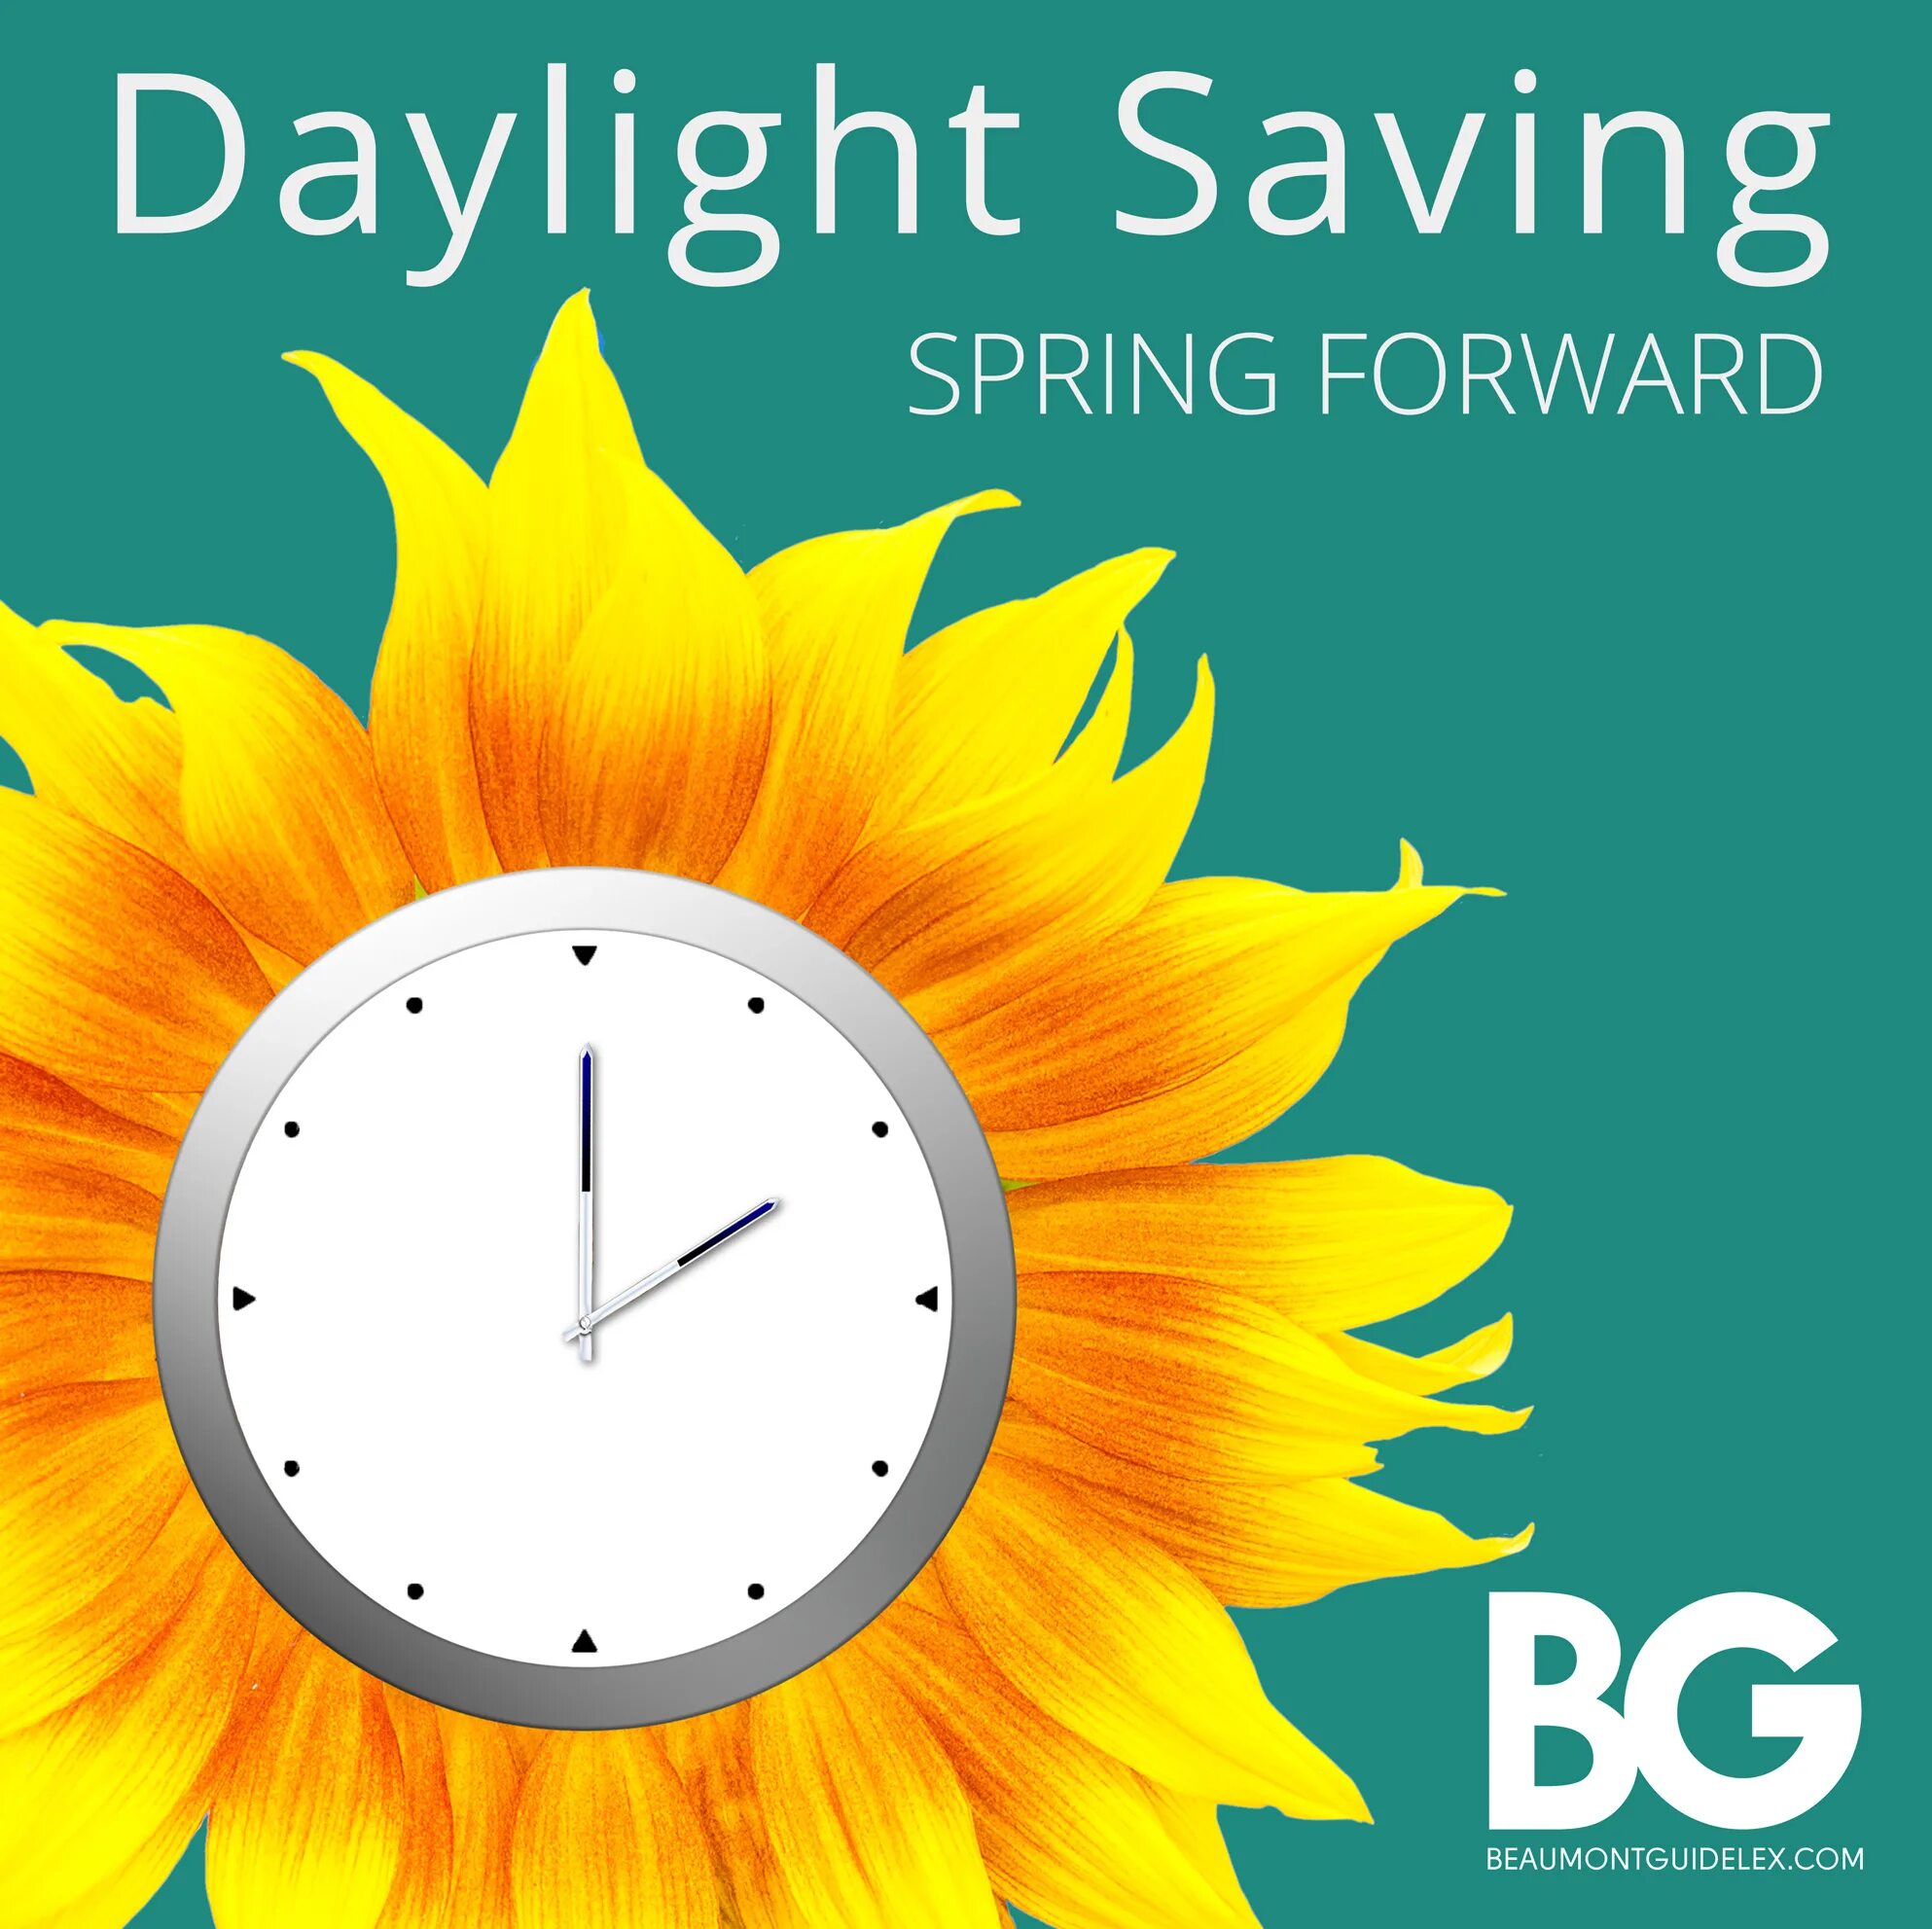 Daylight saving. Daylight saving time. Spring Daylight savings. Daylight saving Tome. 11 апреля 2020 день